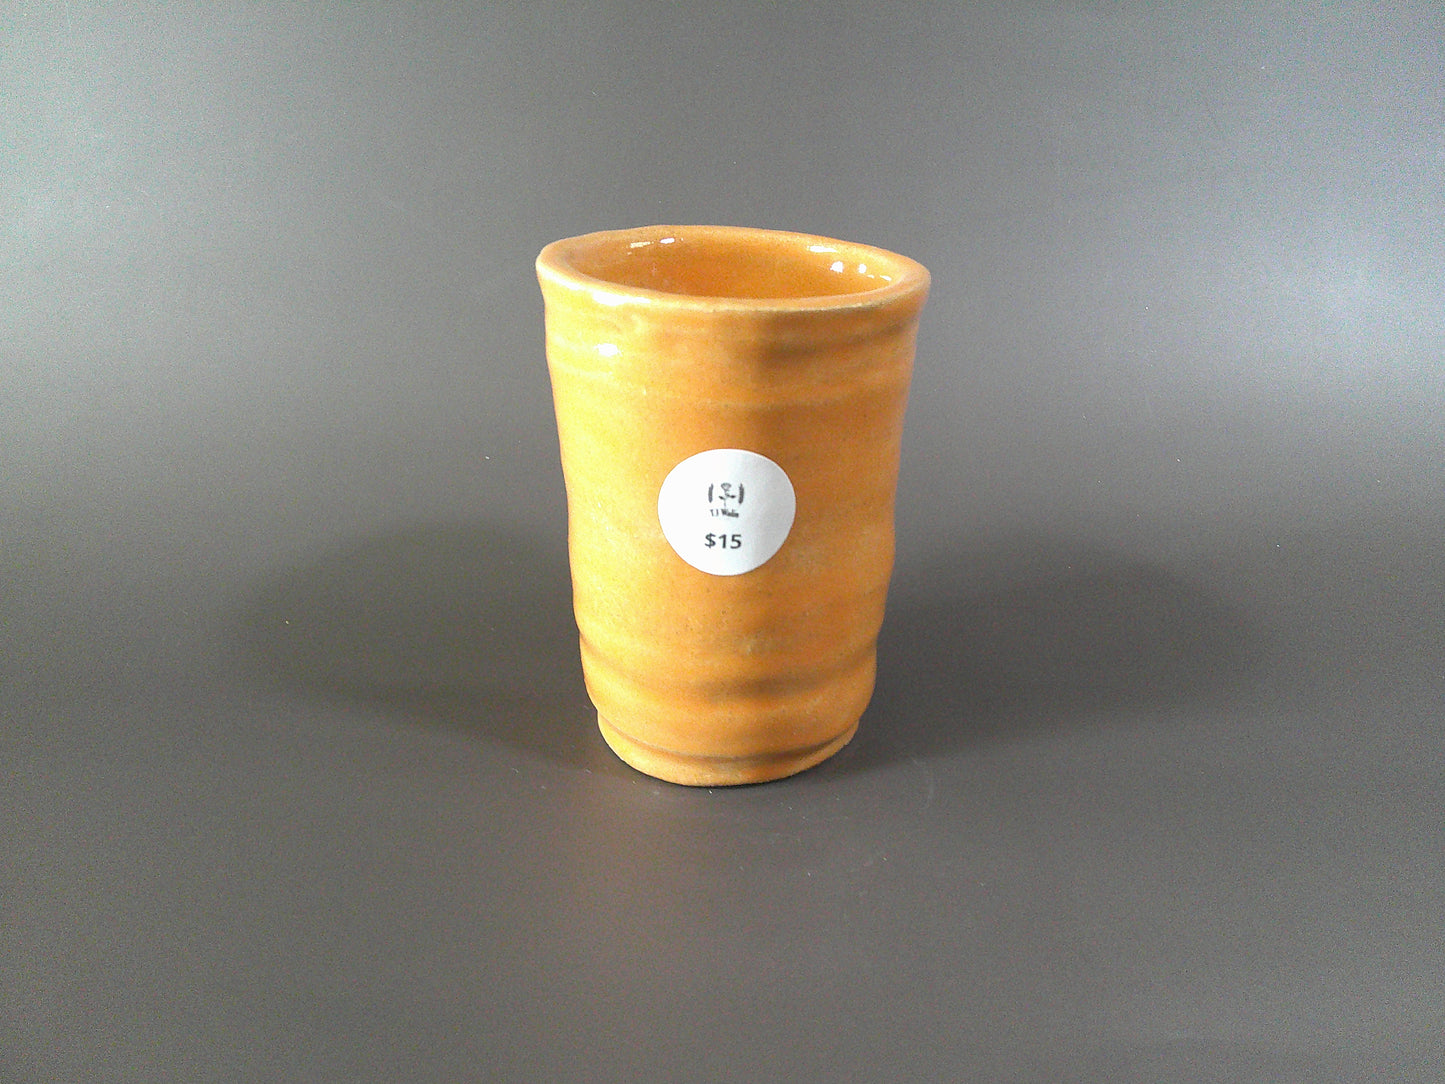 Small Orange Pottery piece $15